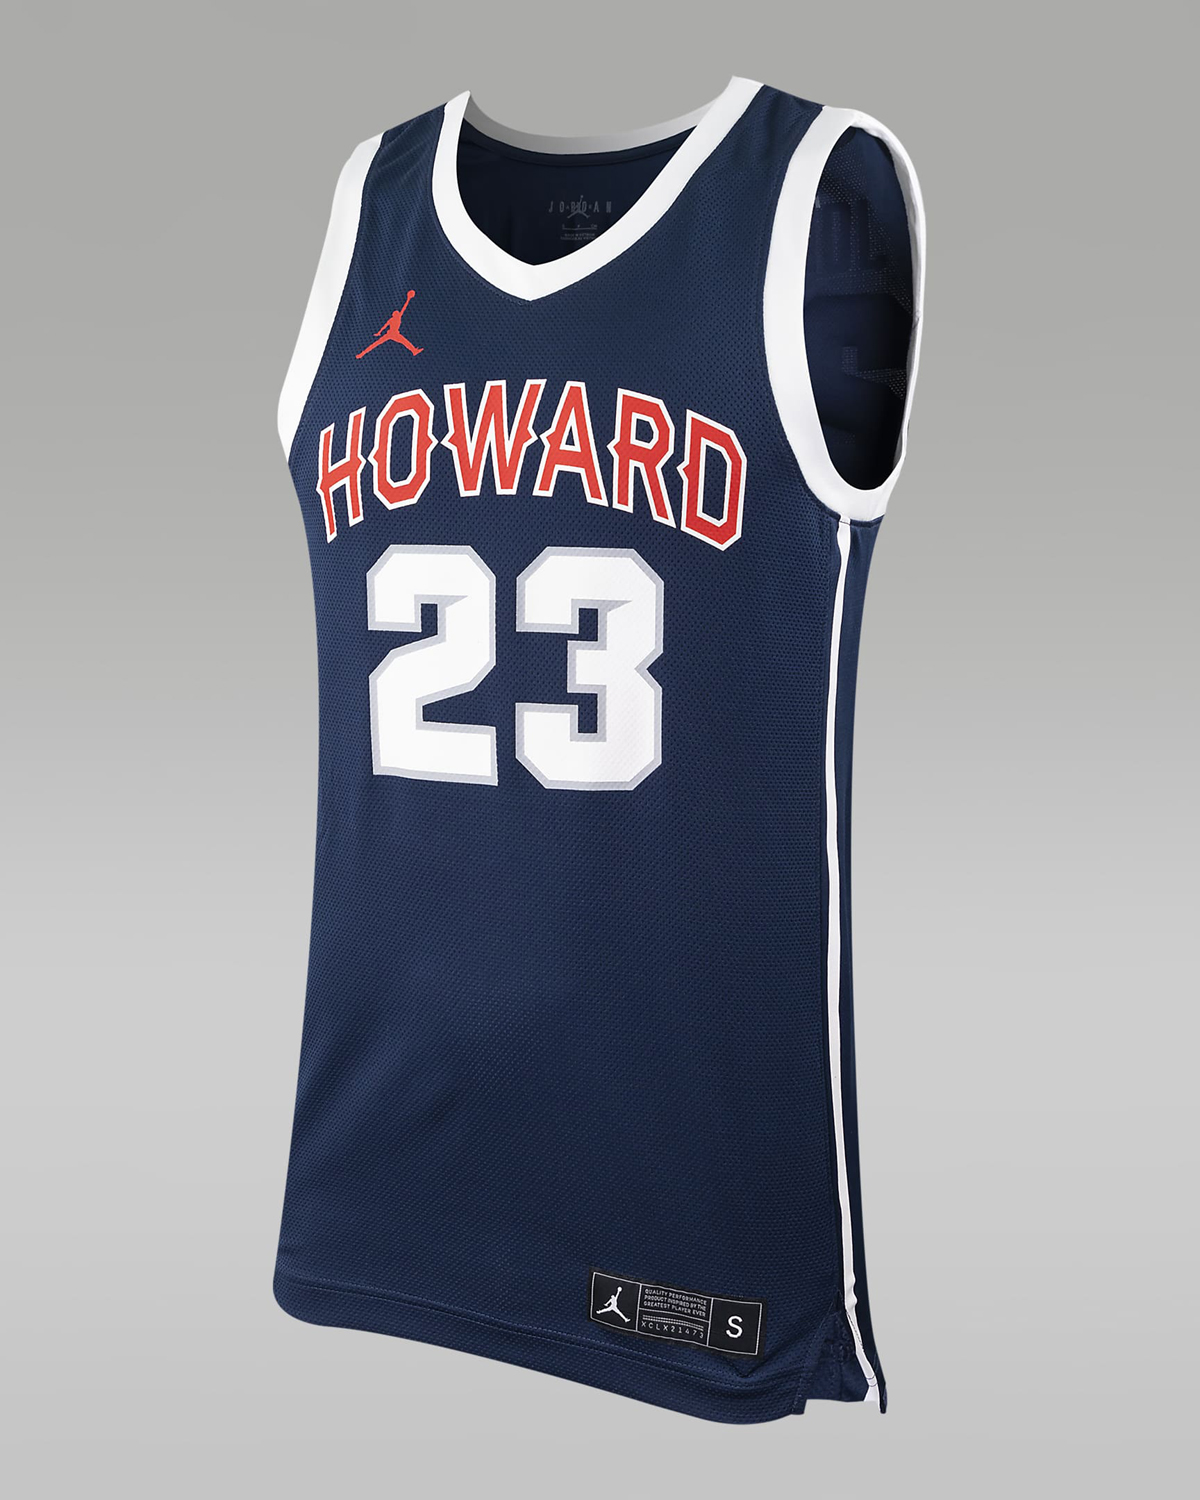 Jordan-Howard-University-Basketball-Jersey-Navy-1